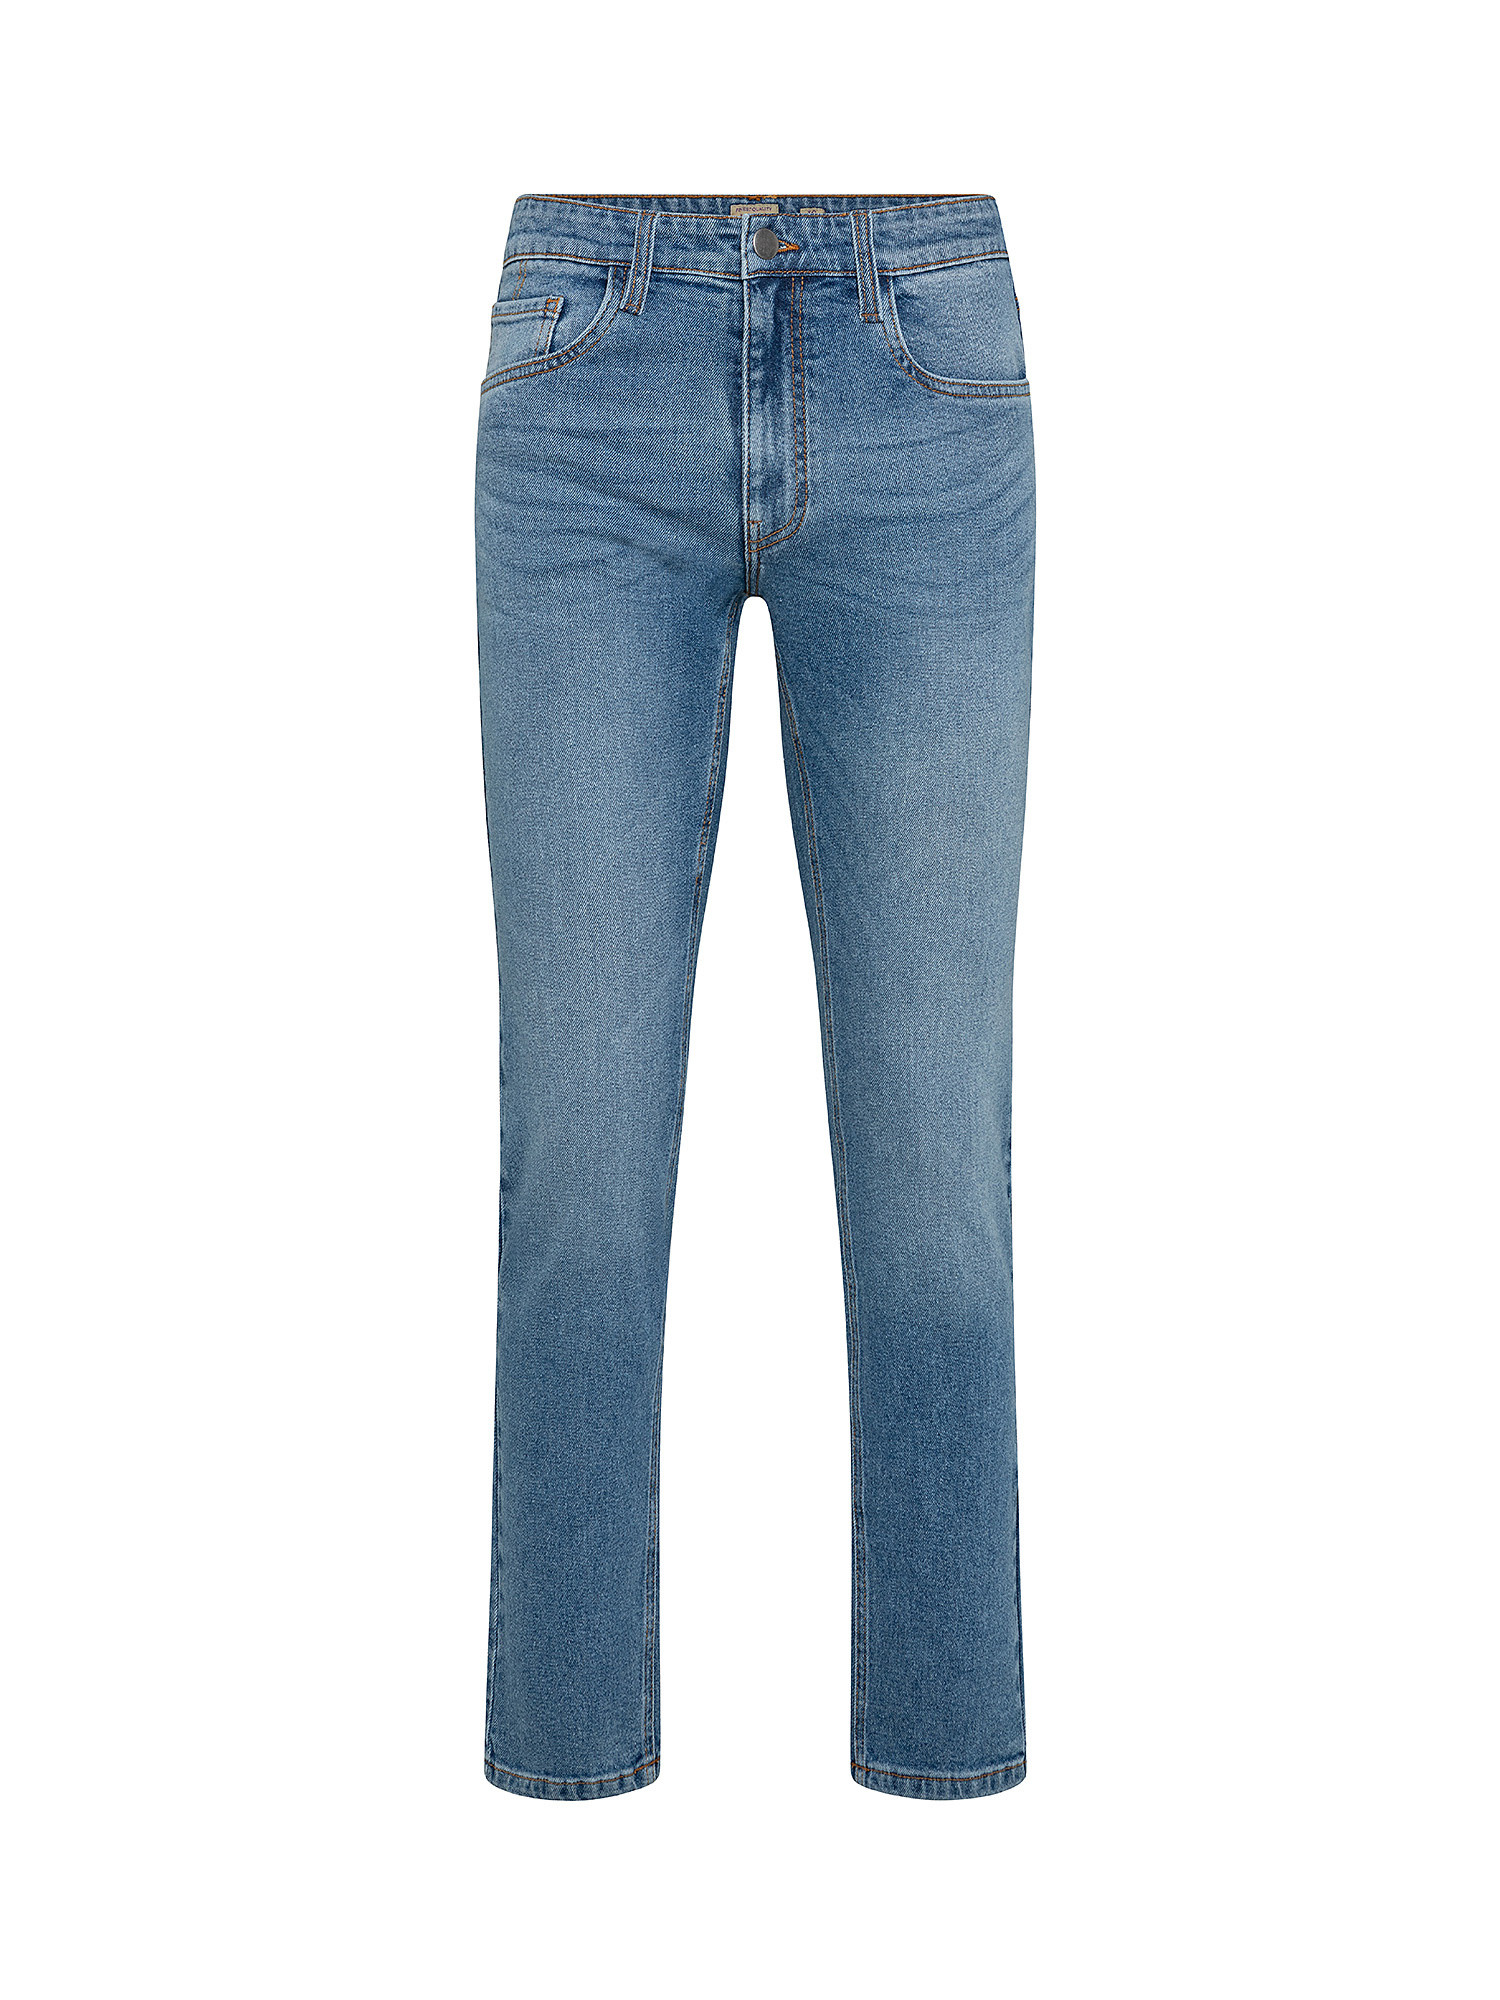 Jeans cinque tasche, Blu chiaro, large image number 0